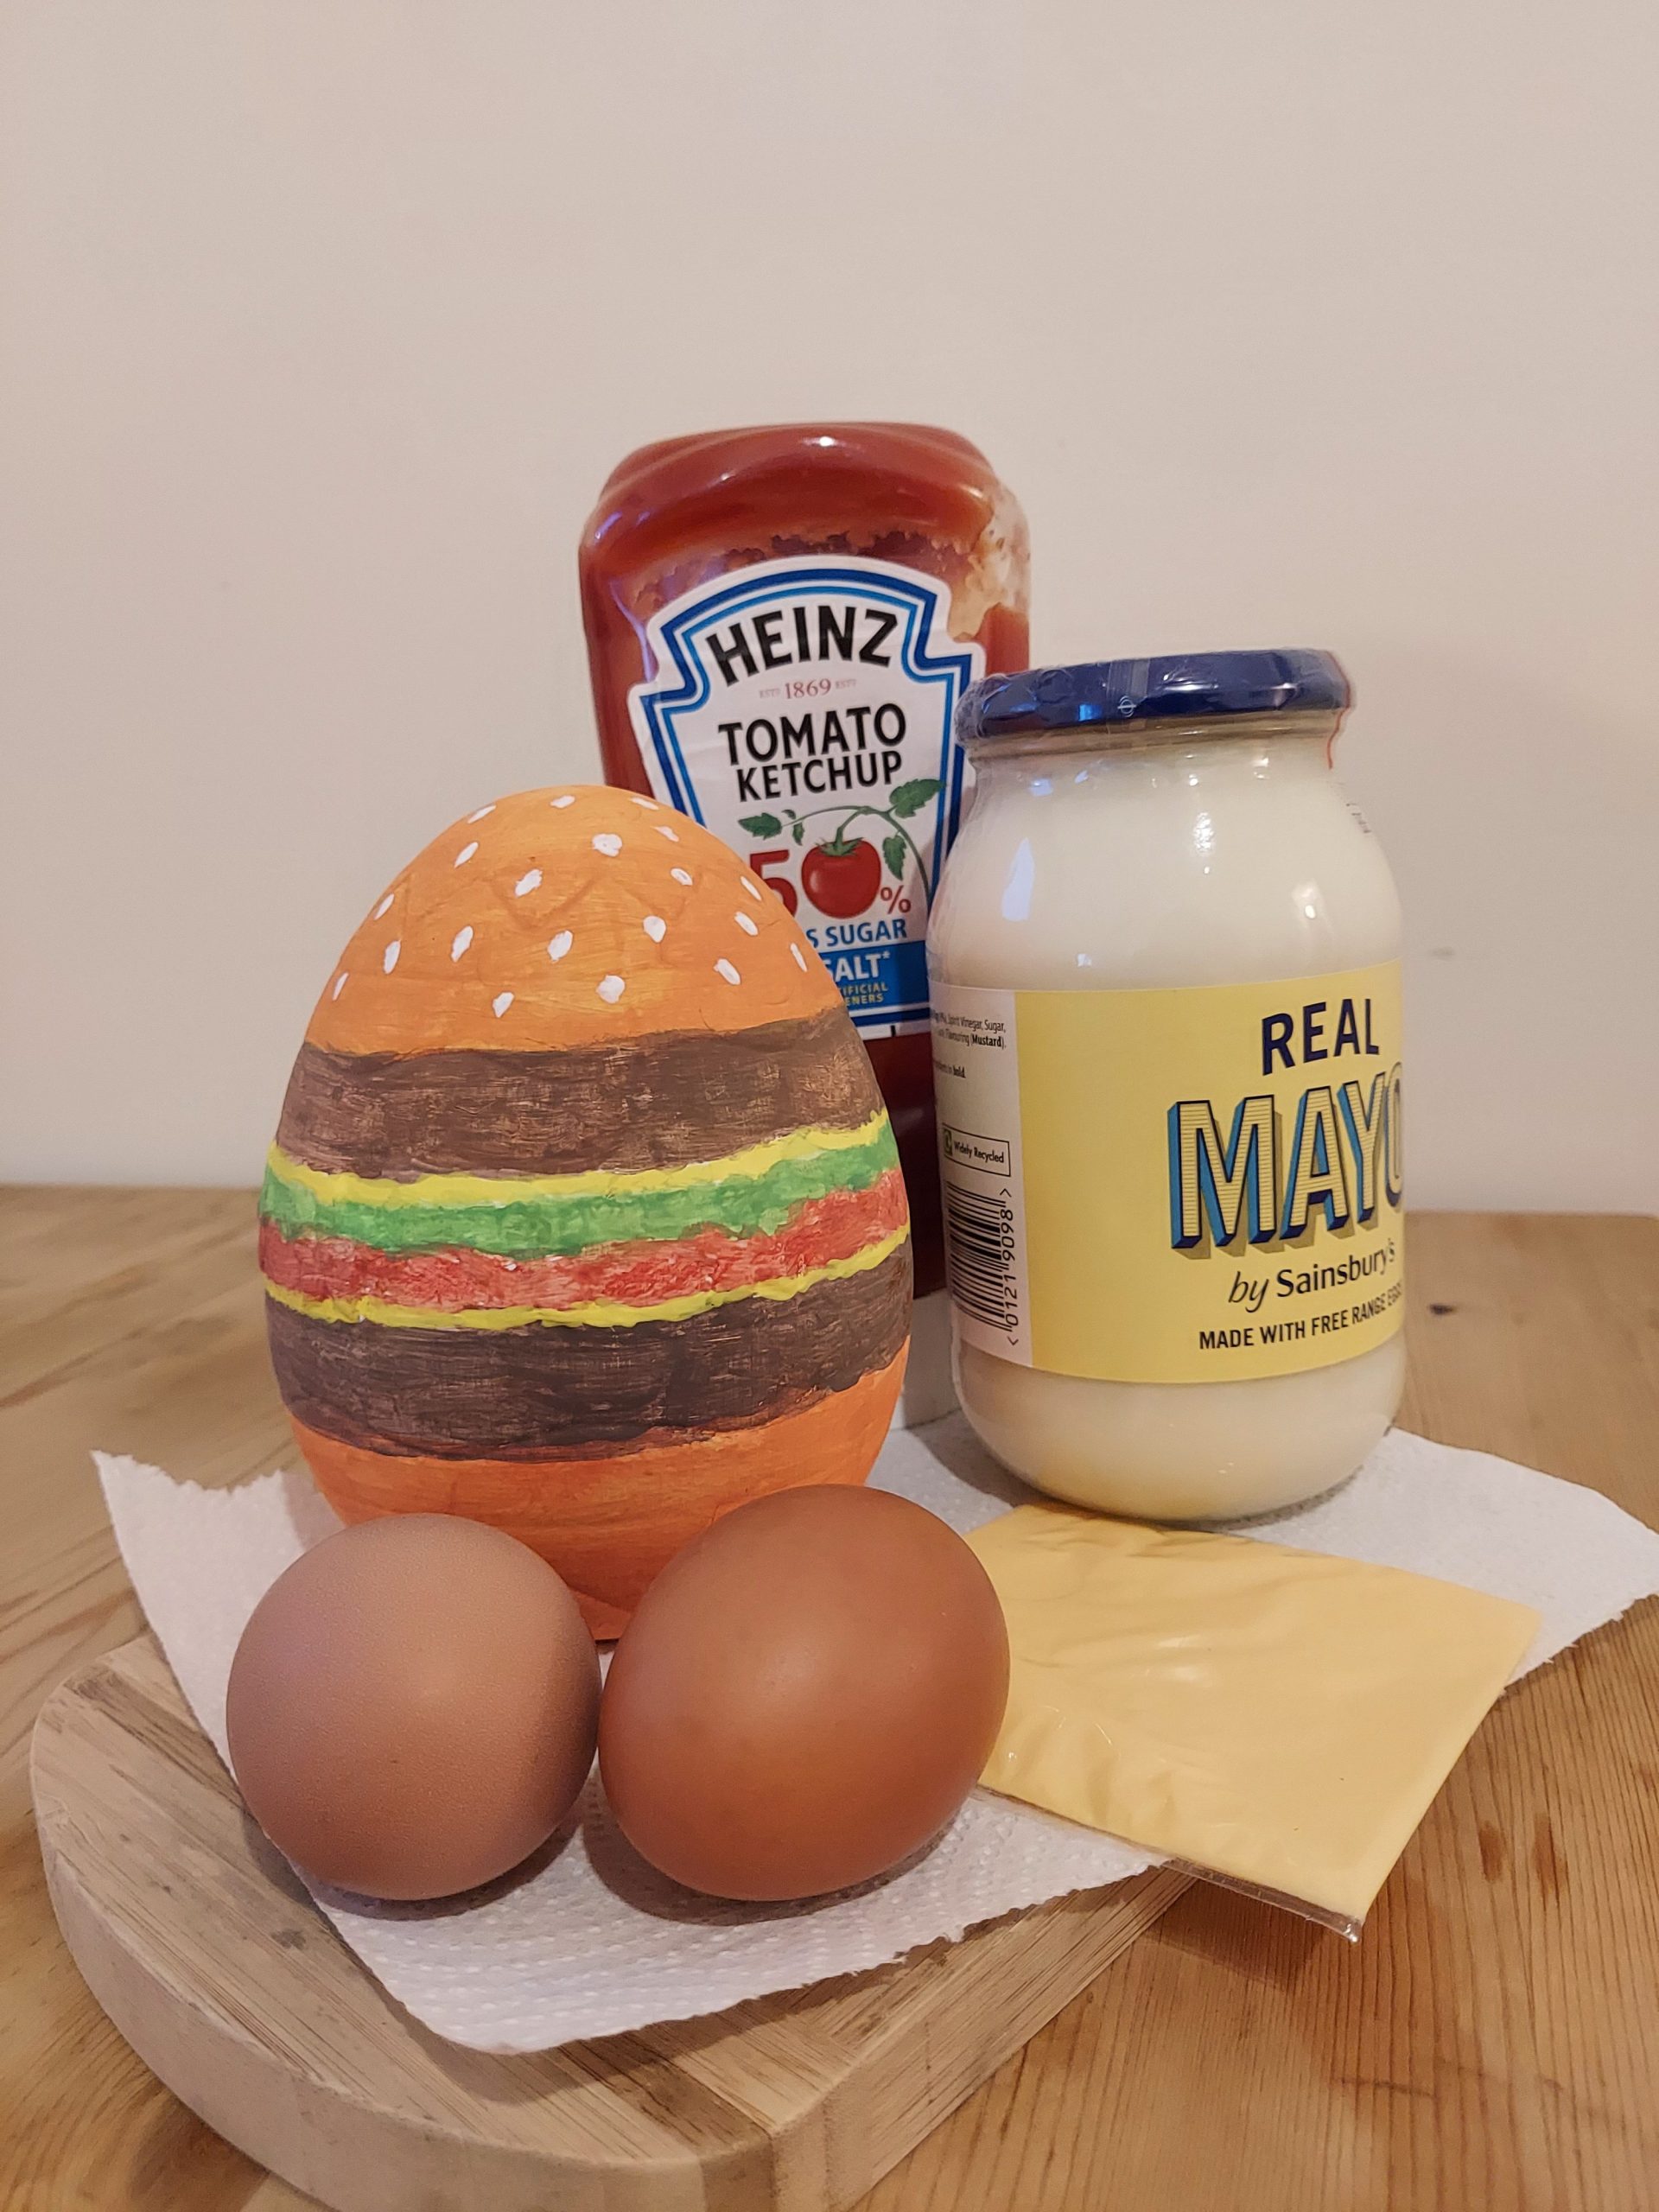 https://lisaslaw.co.uk/wp-content/uploads/2021/04/Easter-Egg-Victoria-scaled.jpg